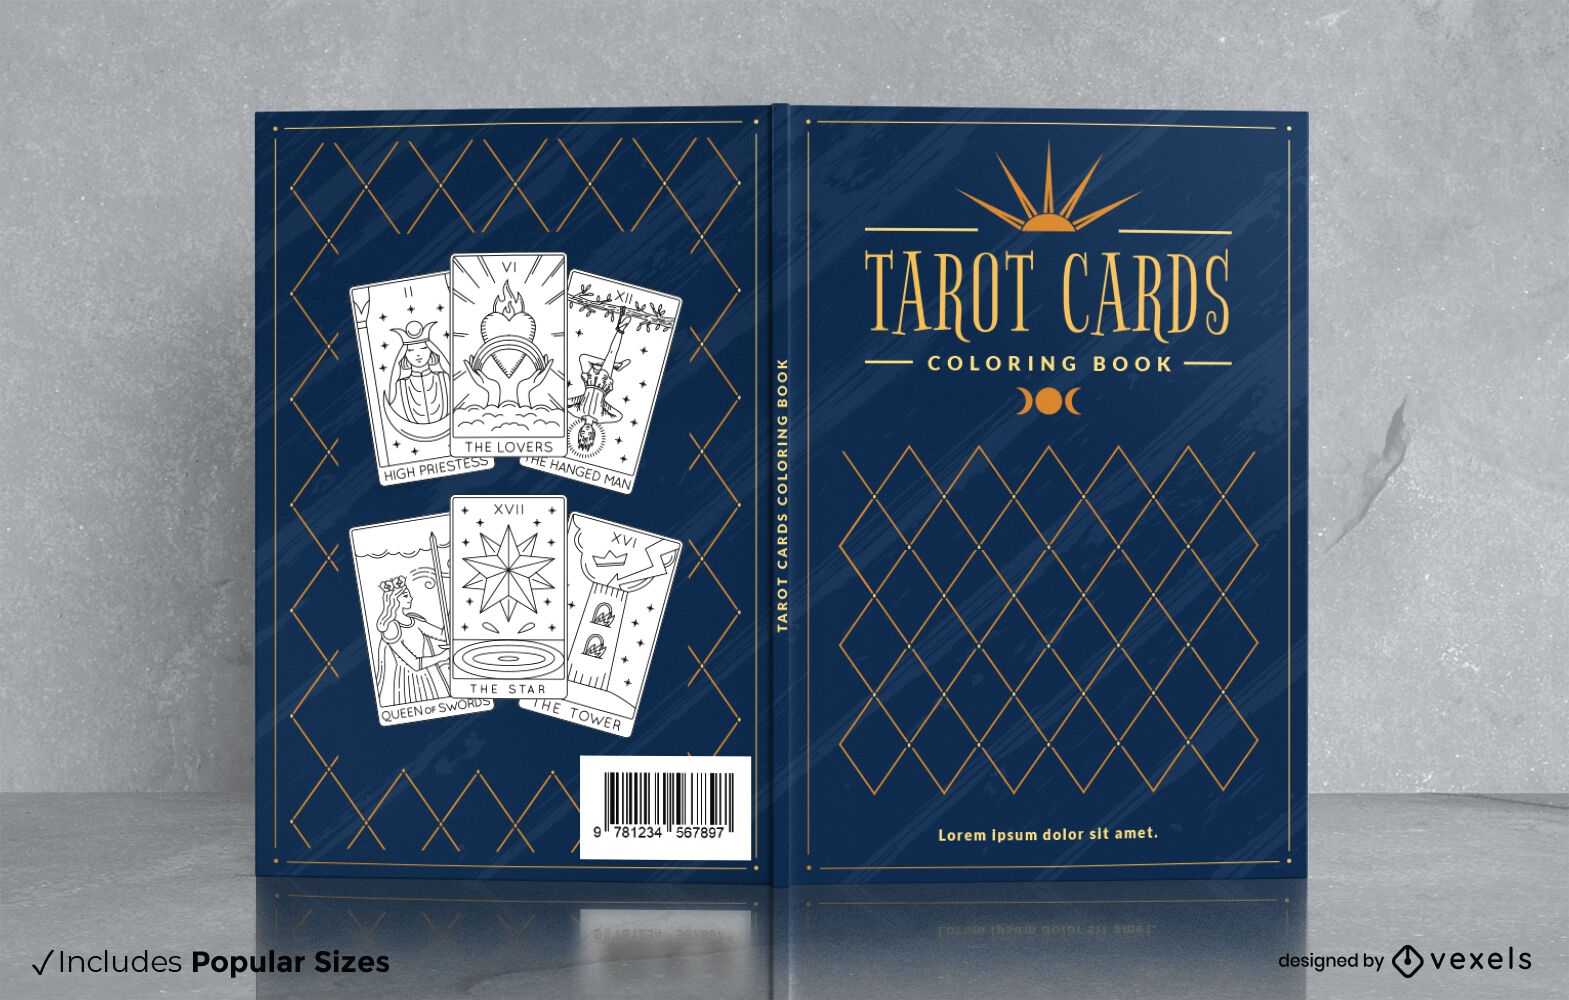 Tarot cards coloring book cover design